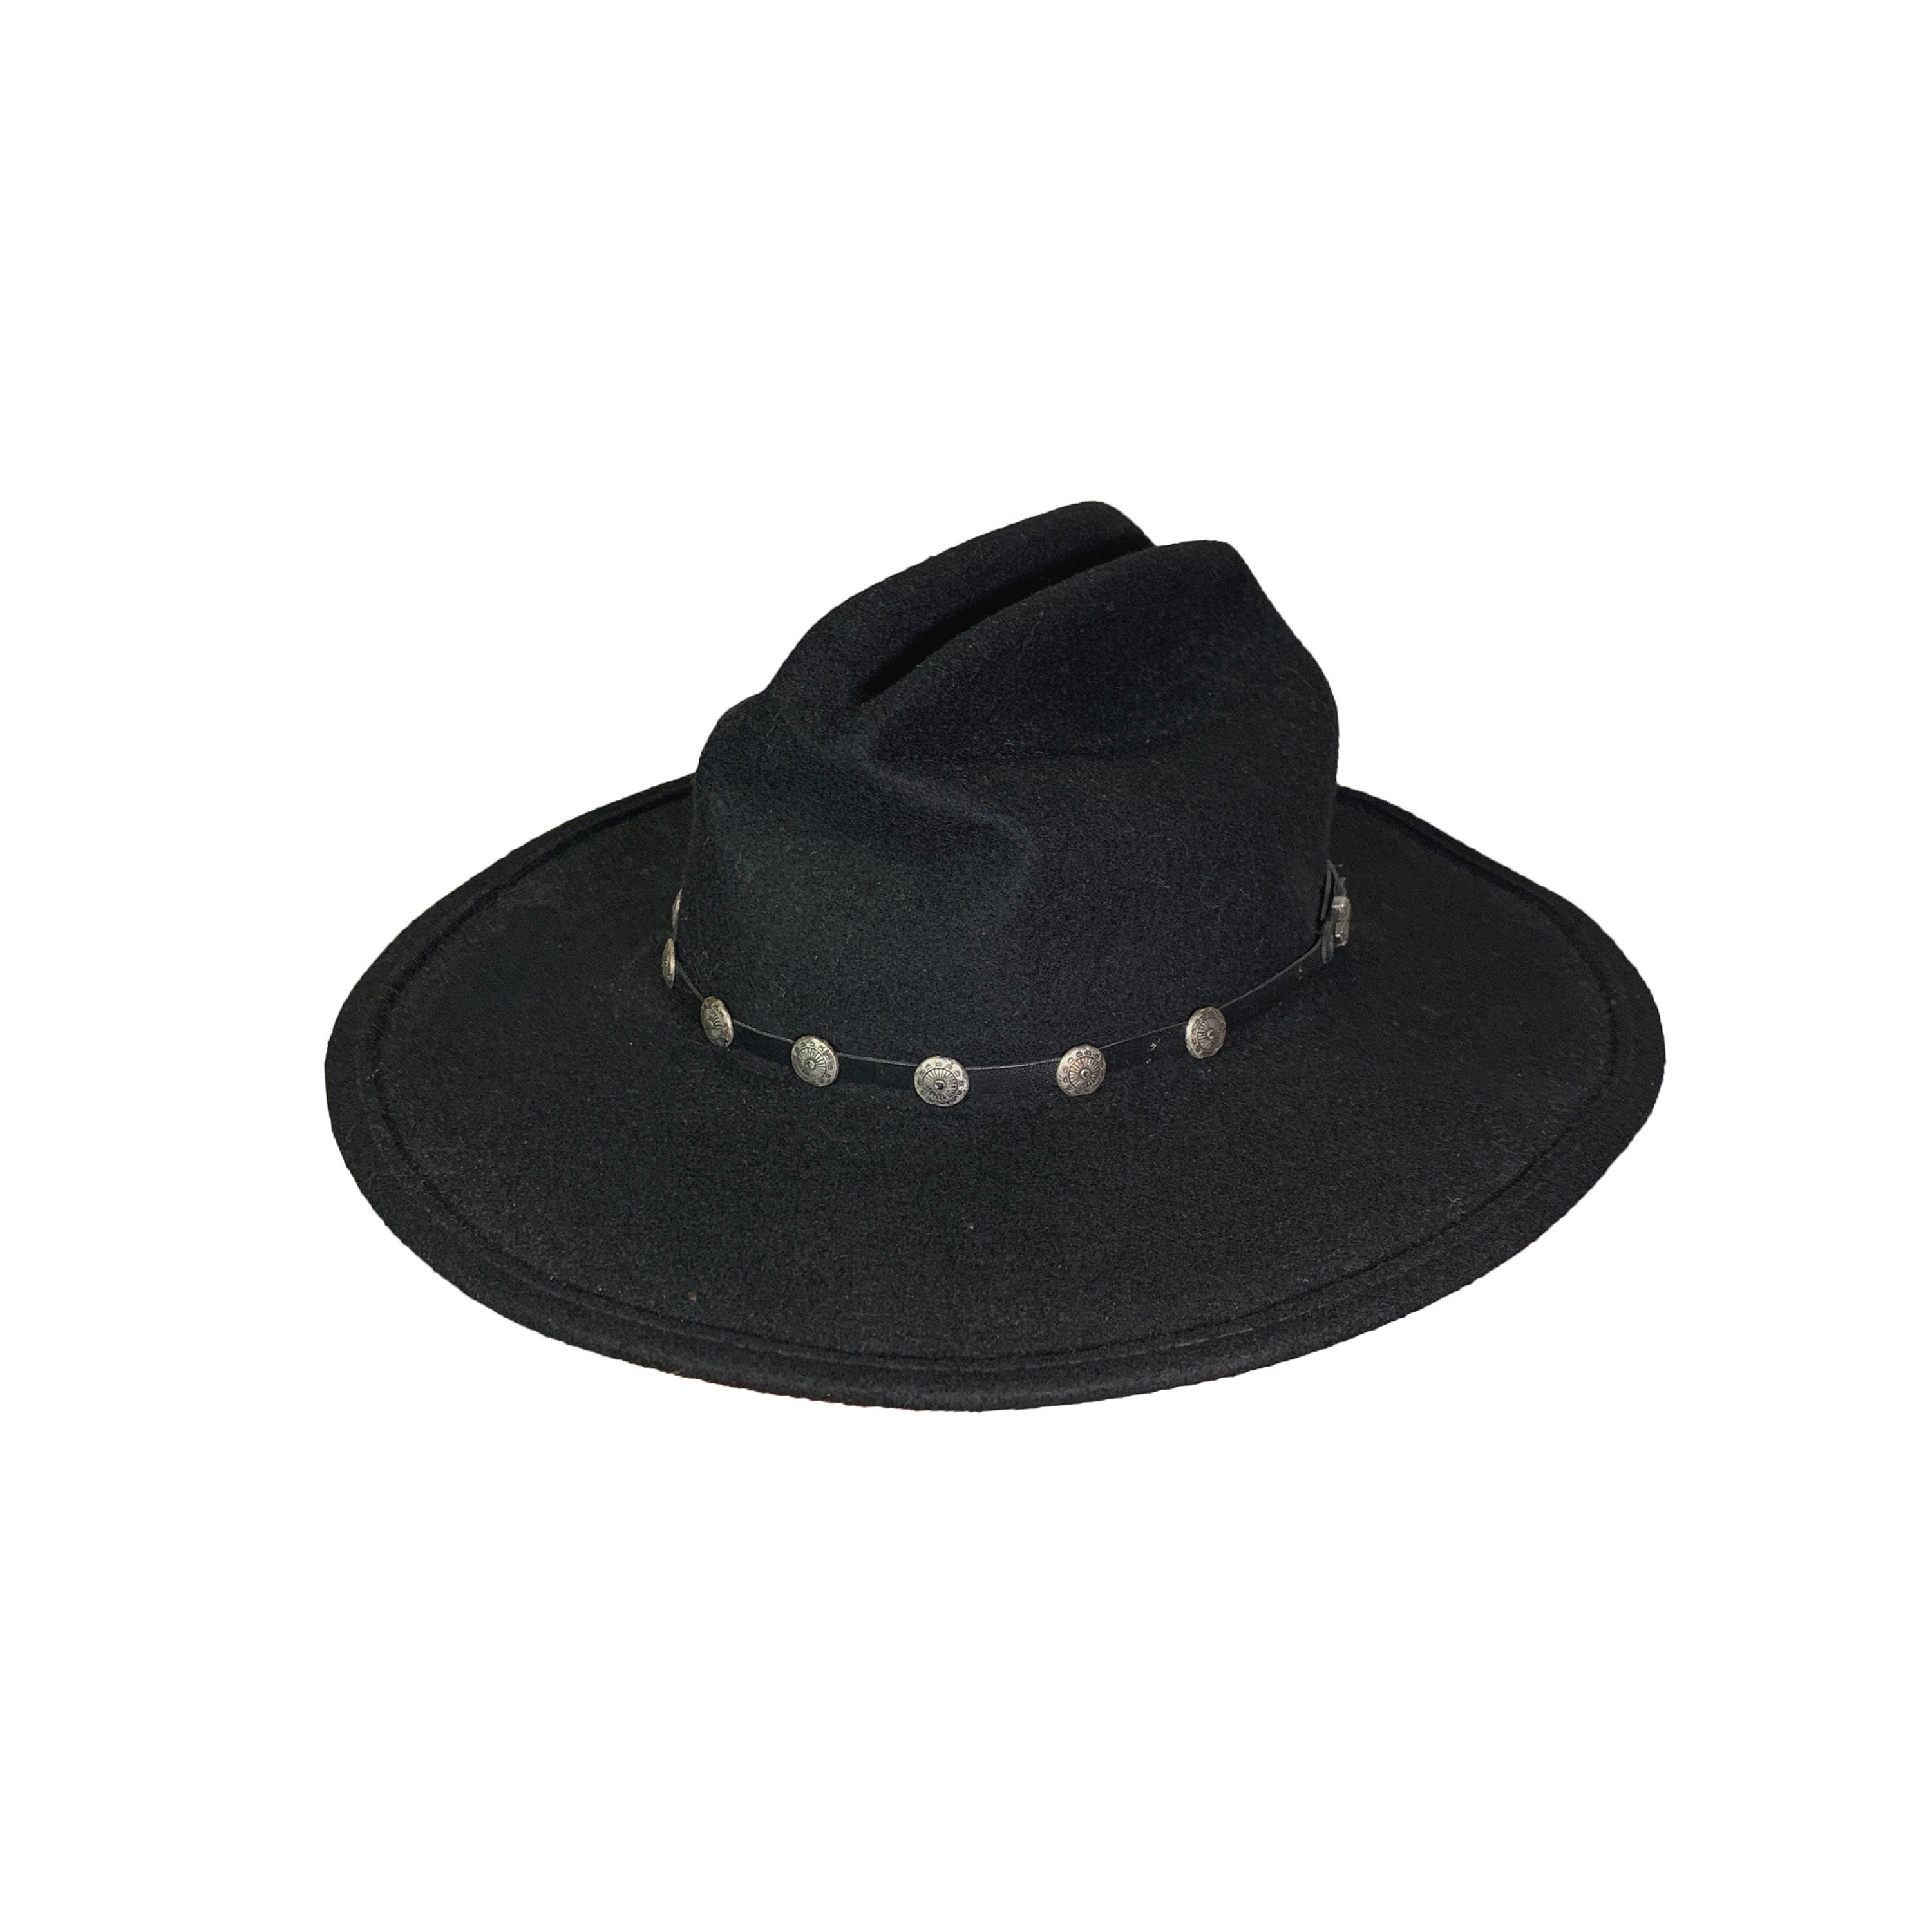 Stetson Regular Oval Dice Wool Felt Hat - Black